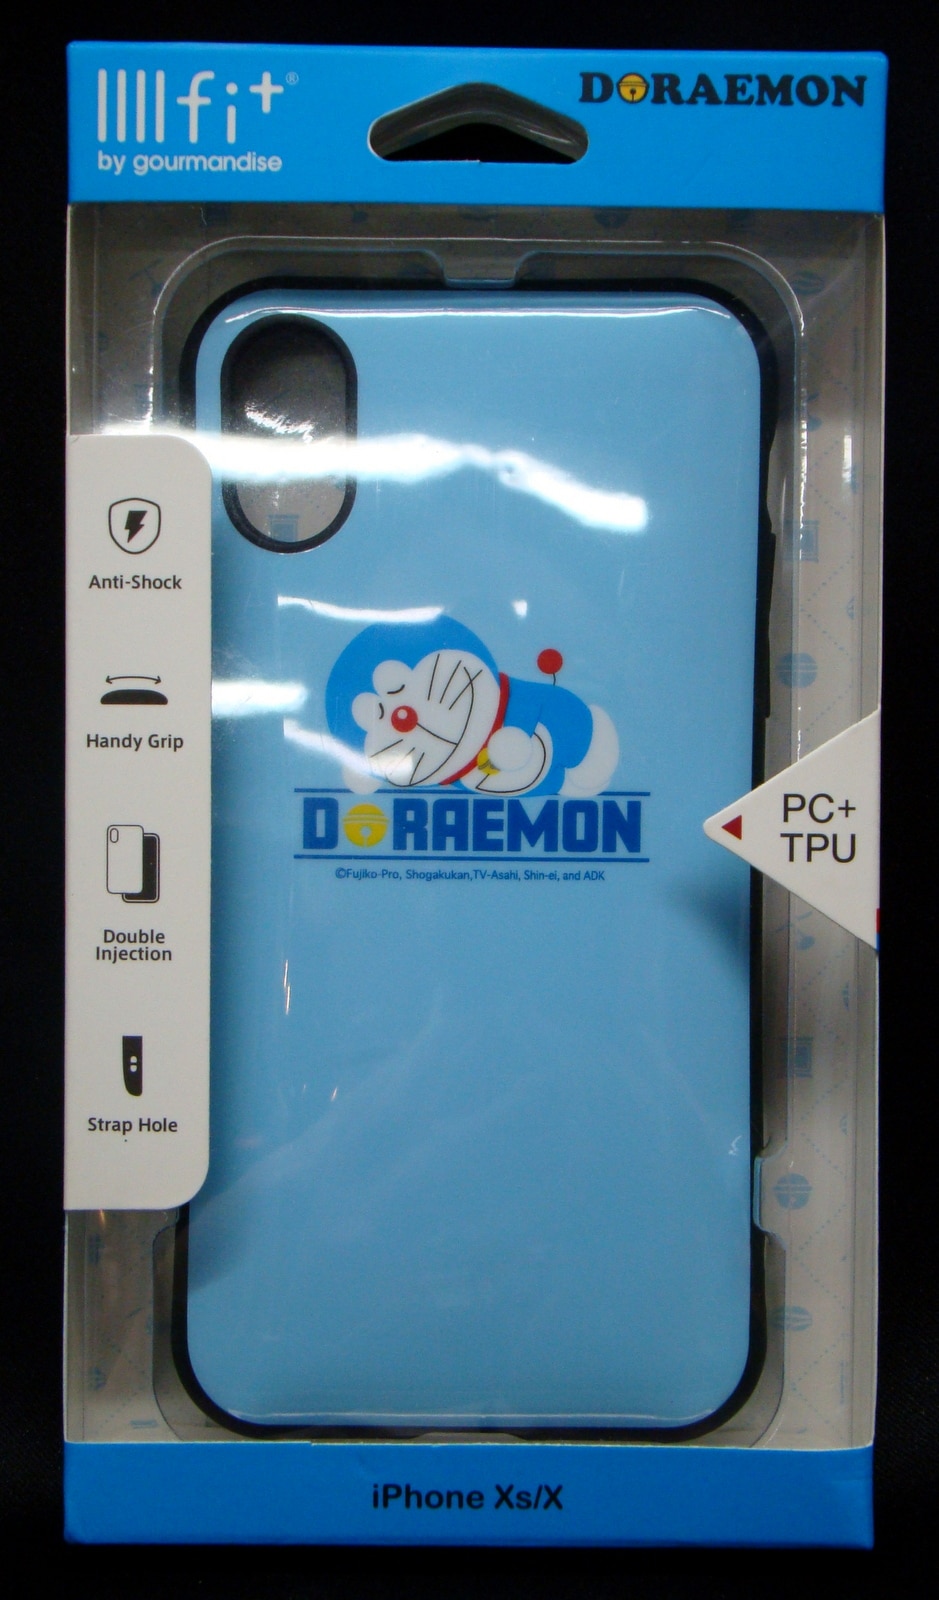 Gourmandise Iphone Xs X Corresponding Iiiifit Case Doraemon